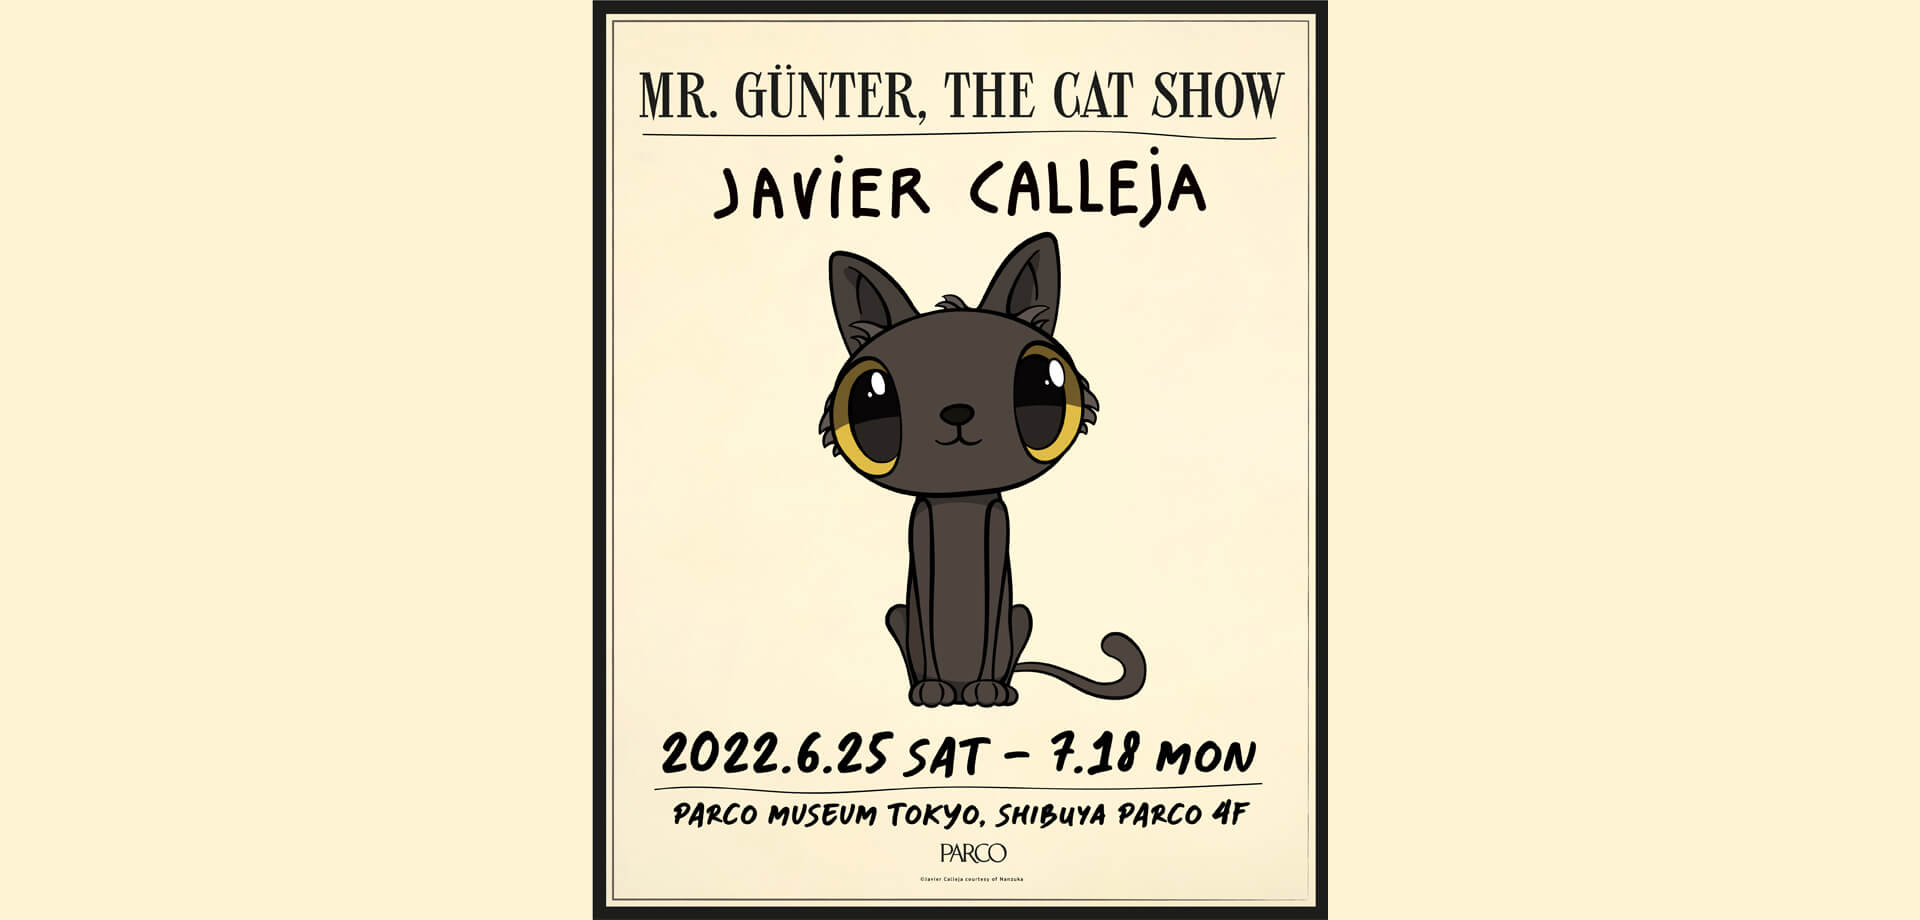 Javier Calleja（ハビア・カジェハ） 展覧会「MR.GUNTER, THE CAT SHOW」PARCO MUSEUM TOKYO